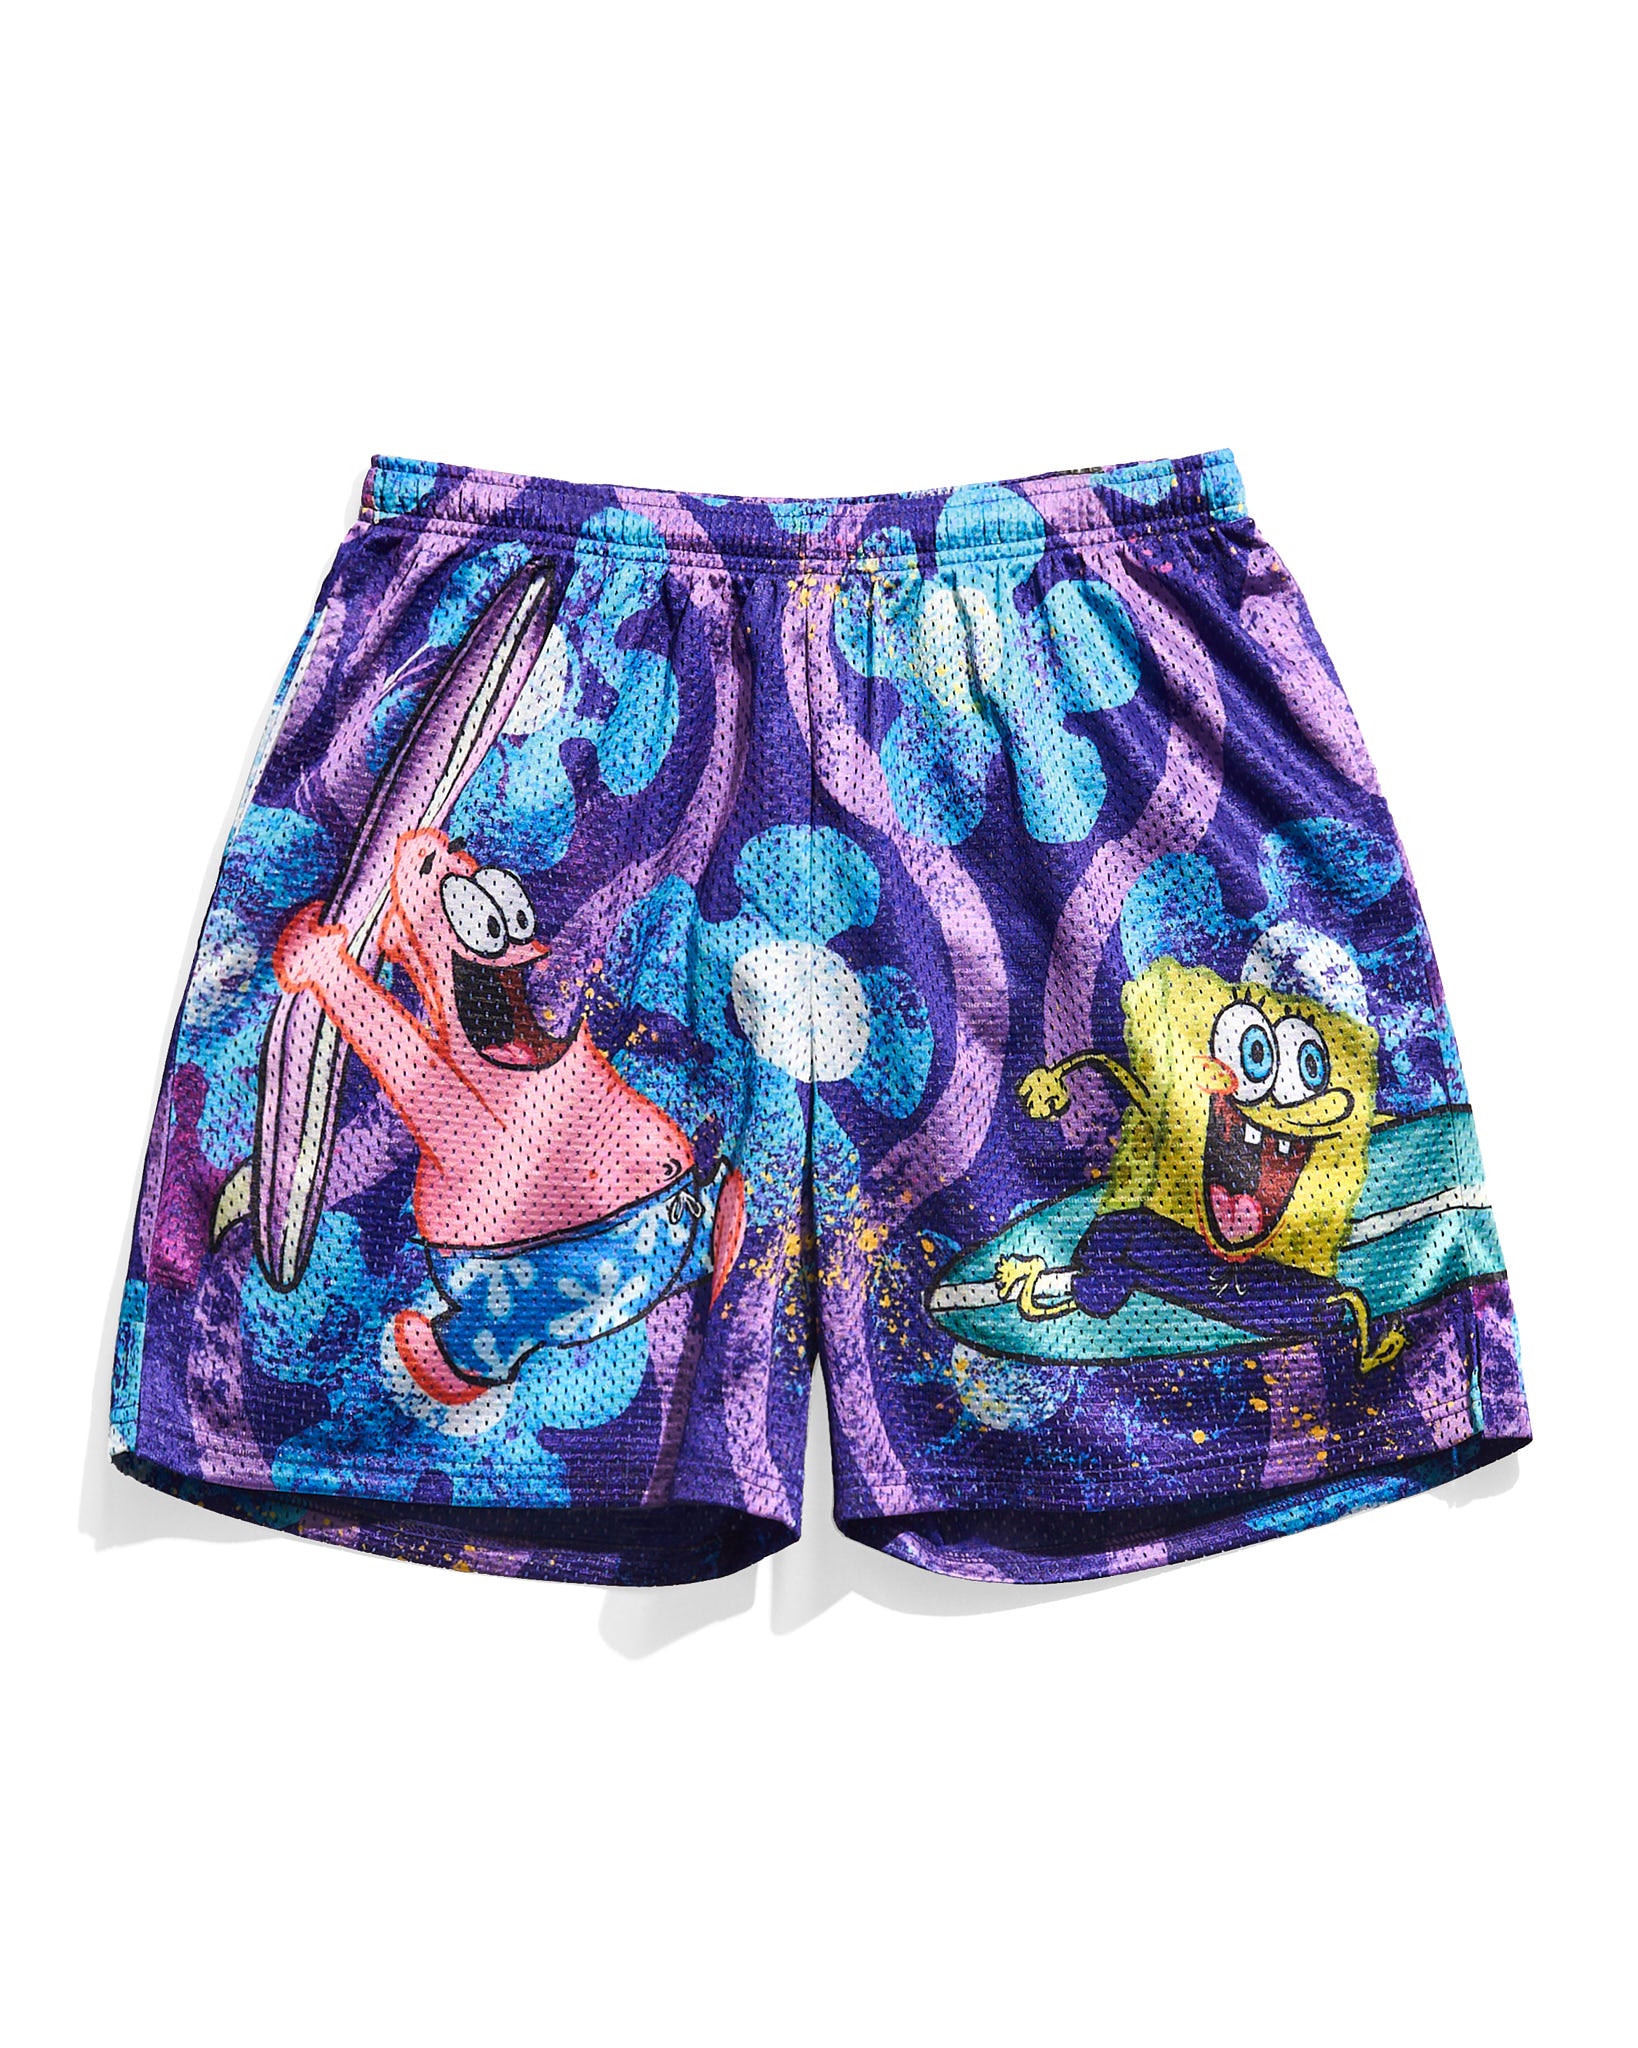 SpongeBob SquarePants Surf's Up Retro Shorts